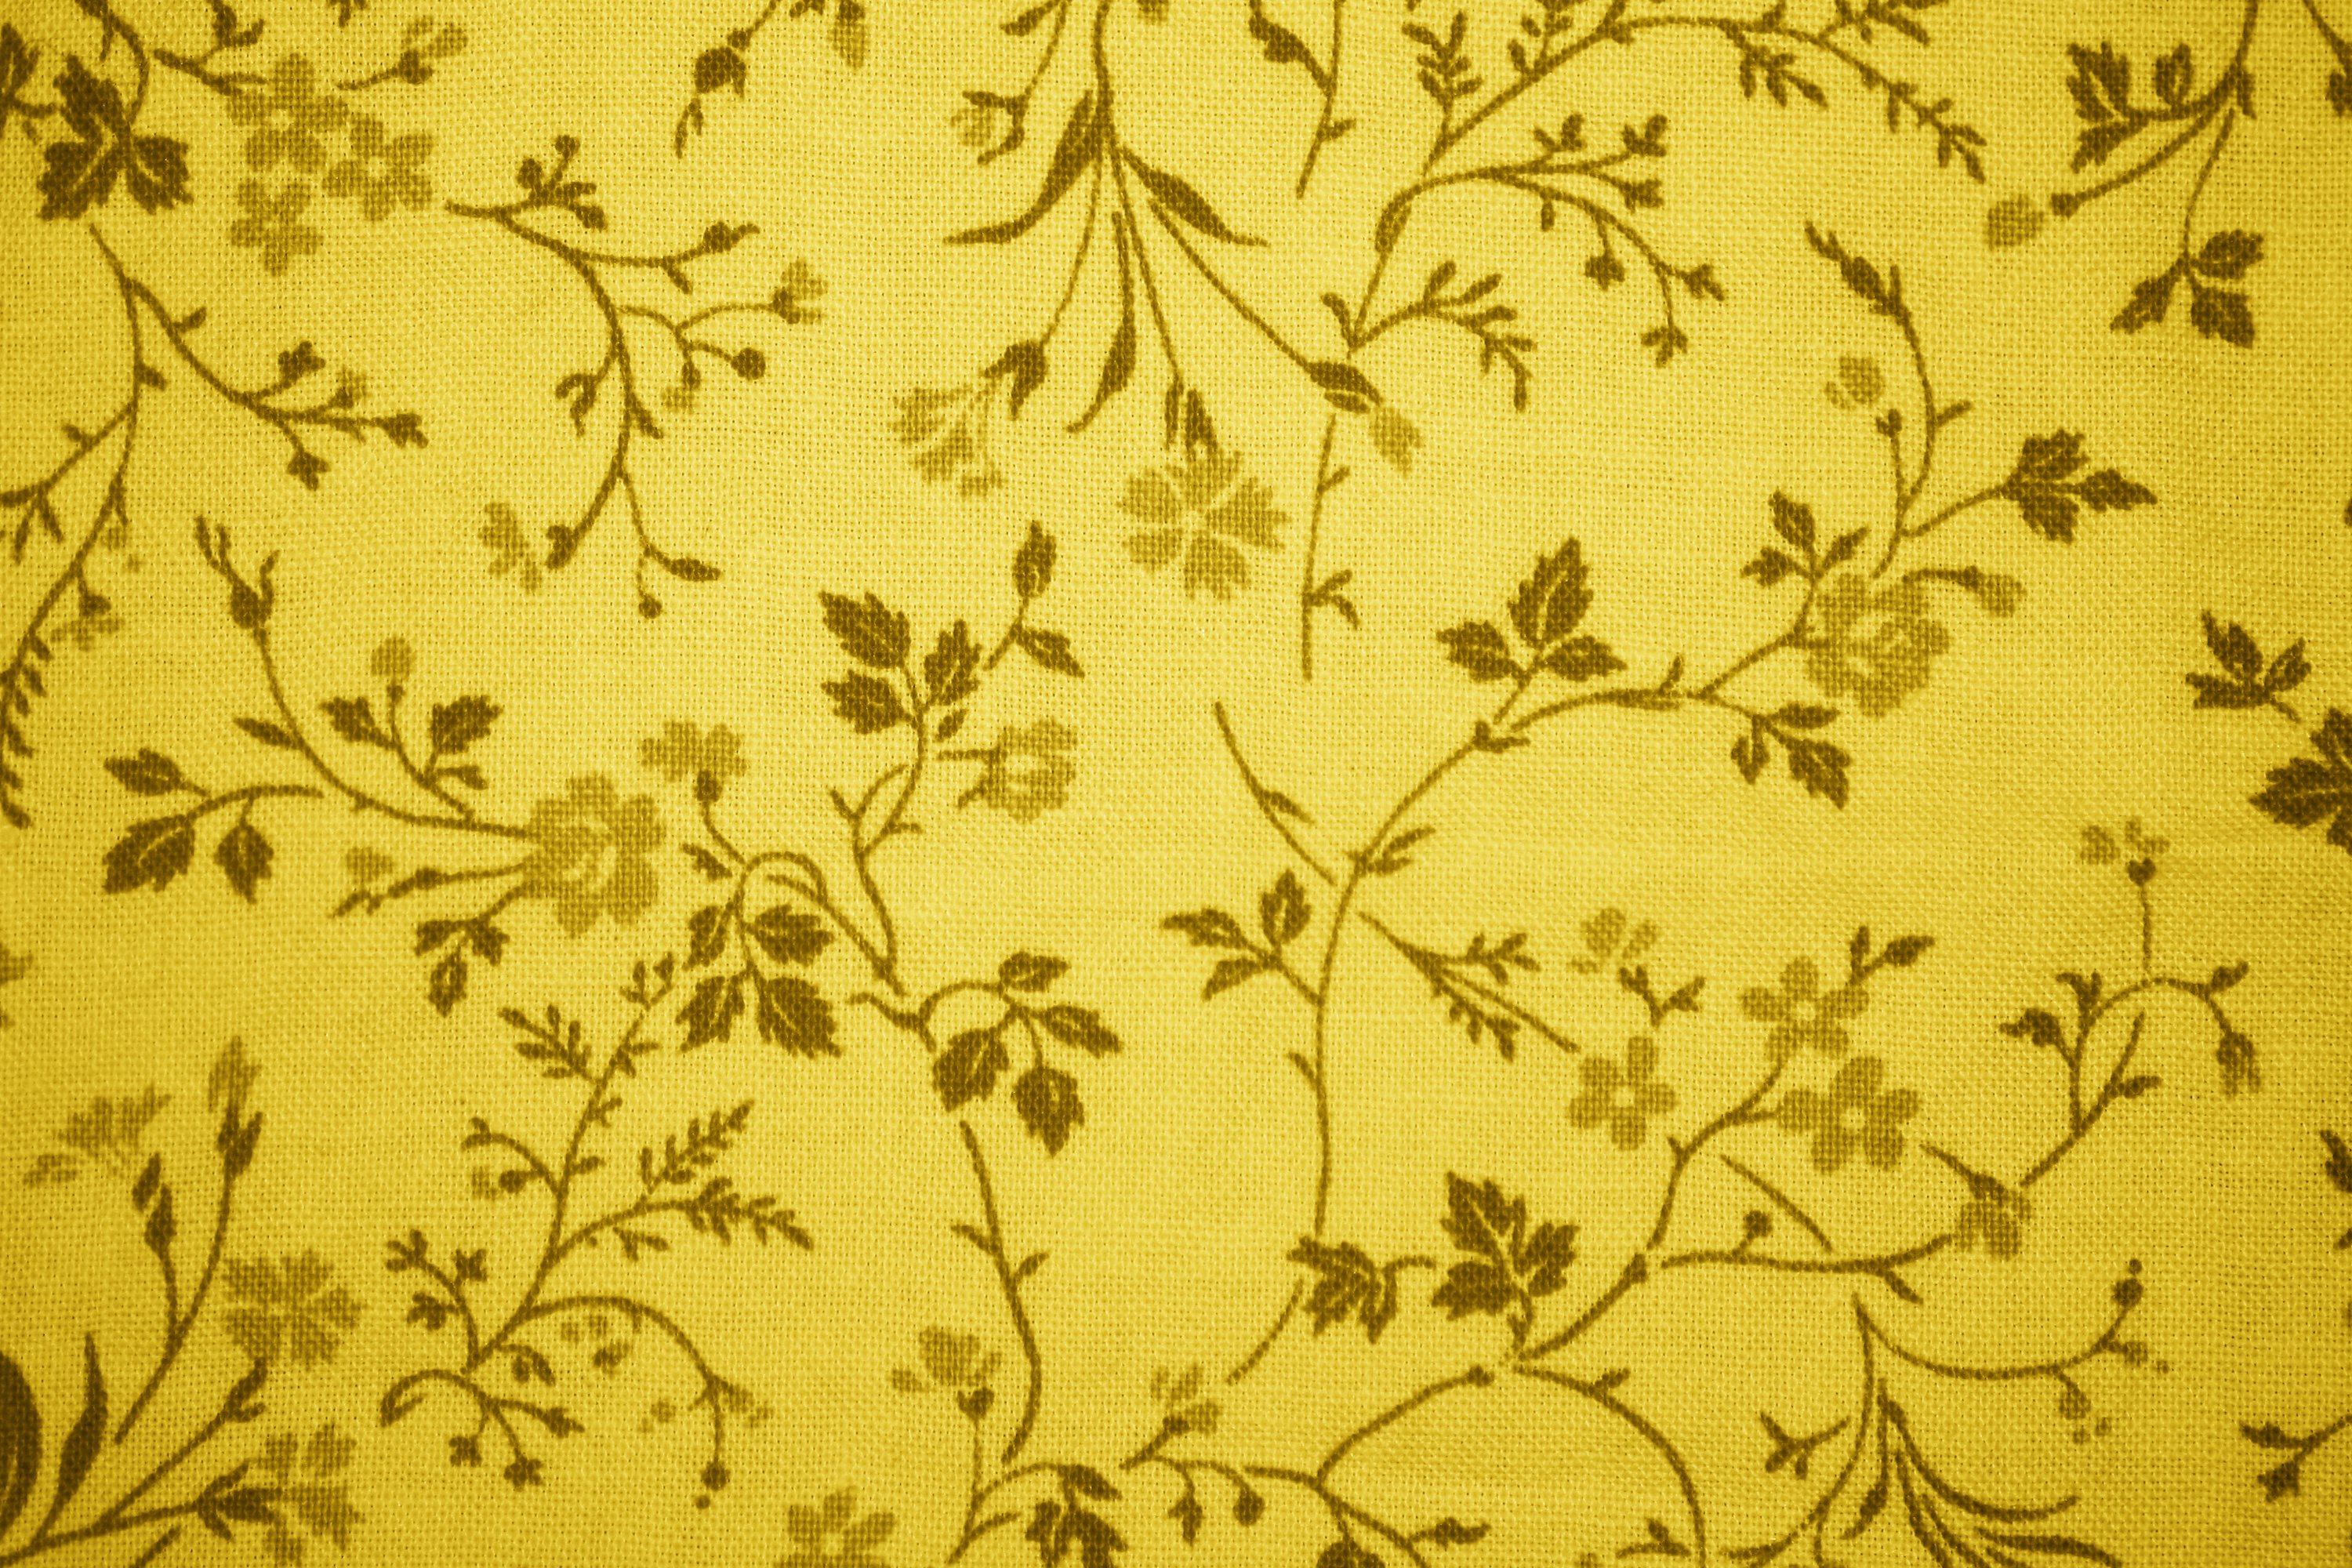 Gold Floral Print Fabric Texture Picture Photograph Photos